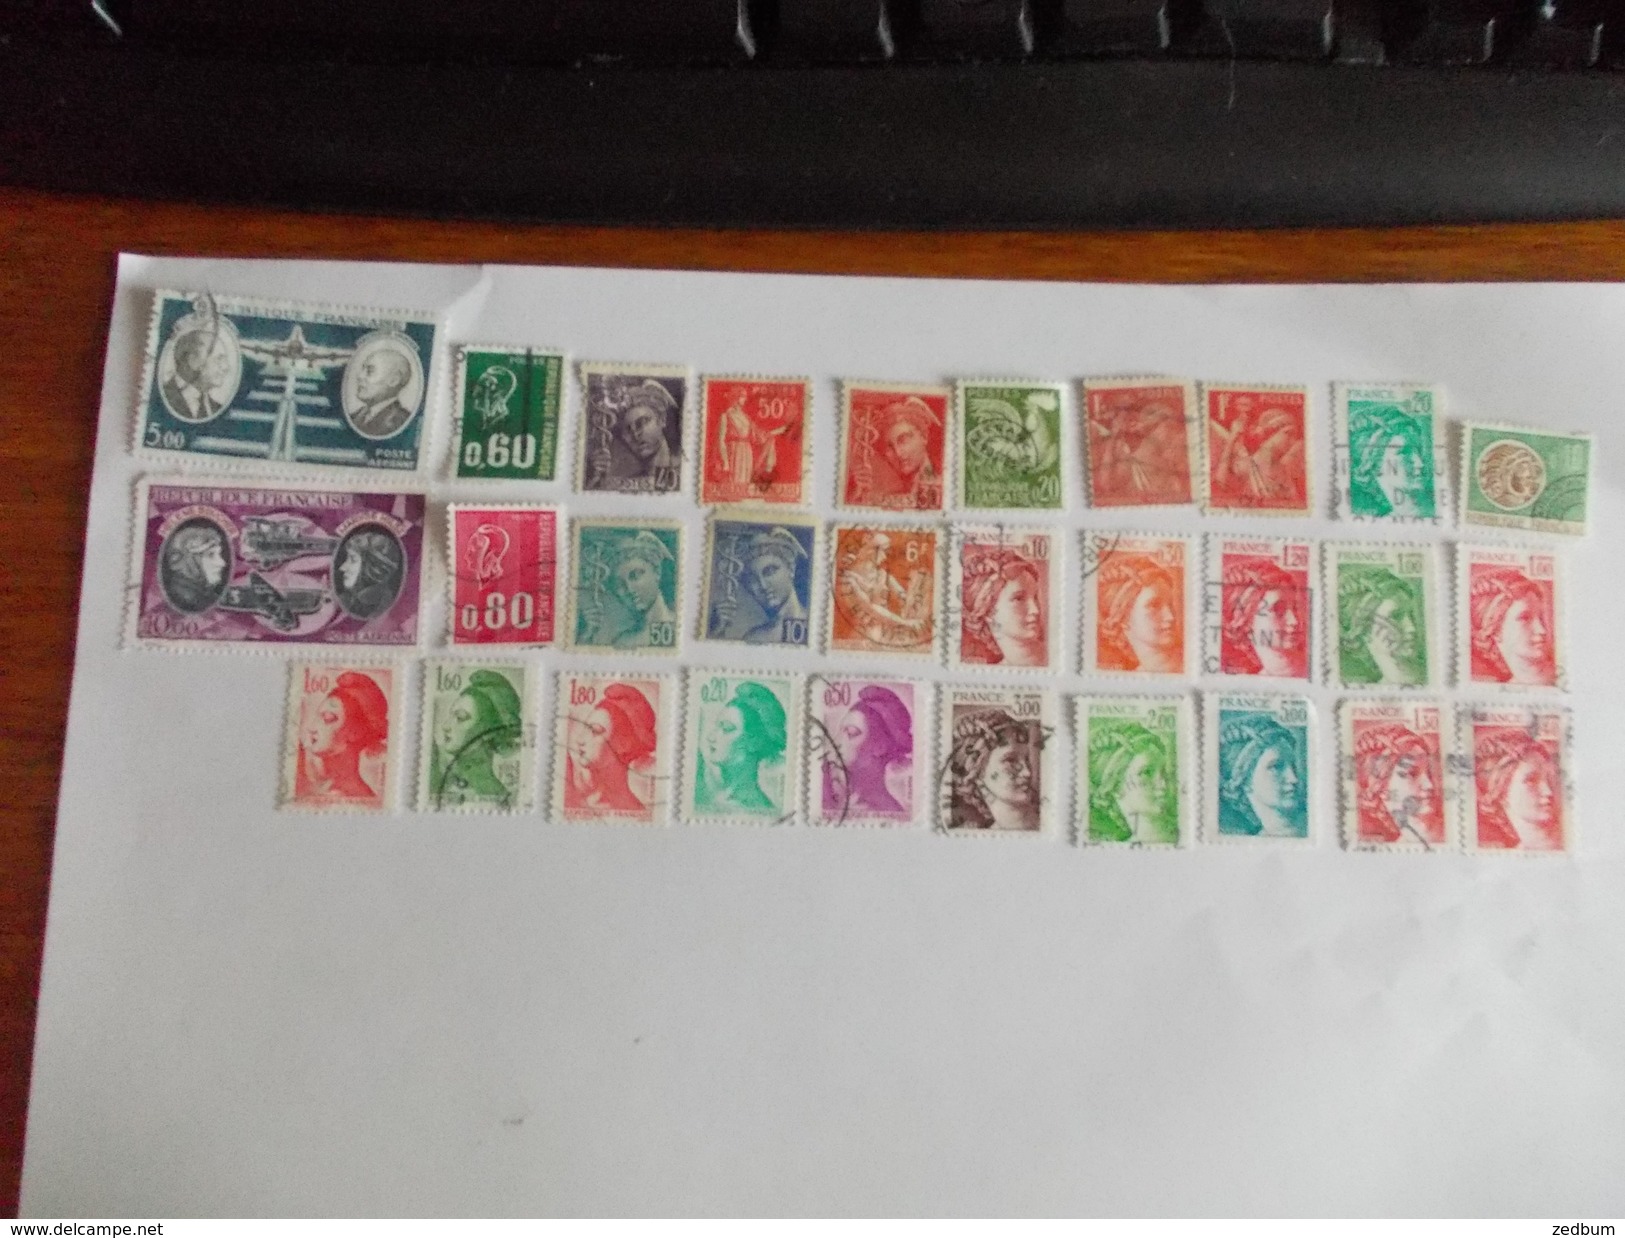 TIMBRE France Lot De 30 Timbres à Identifier N° 496 - Lots & Kiloware (mixtures) - Max. 999 Stamps